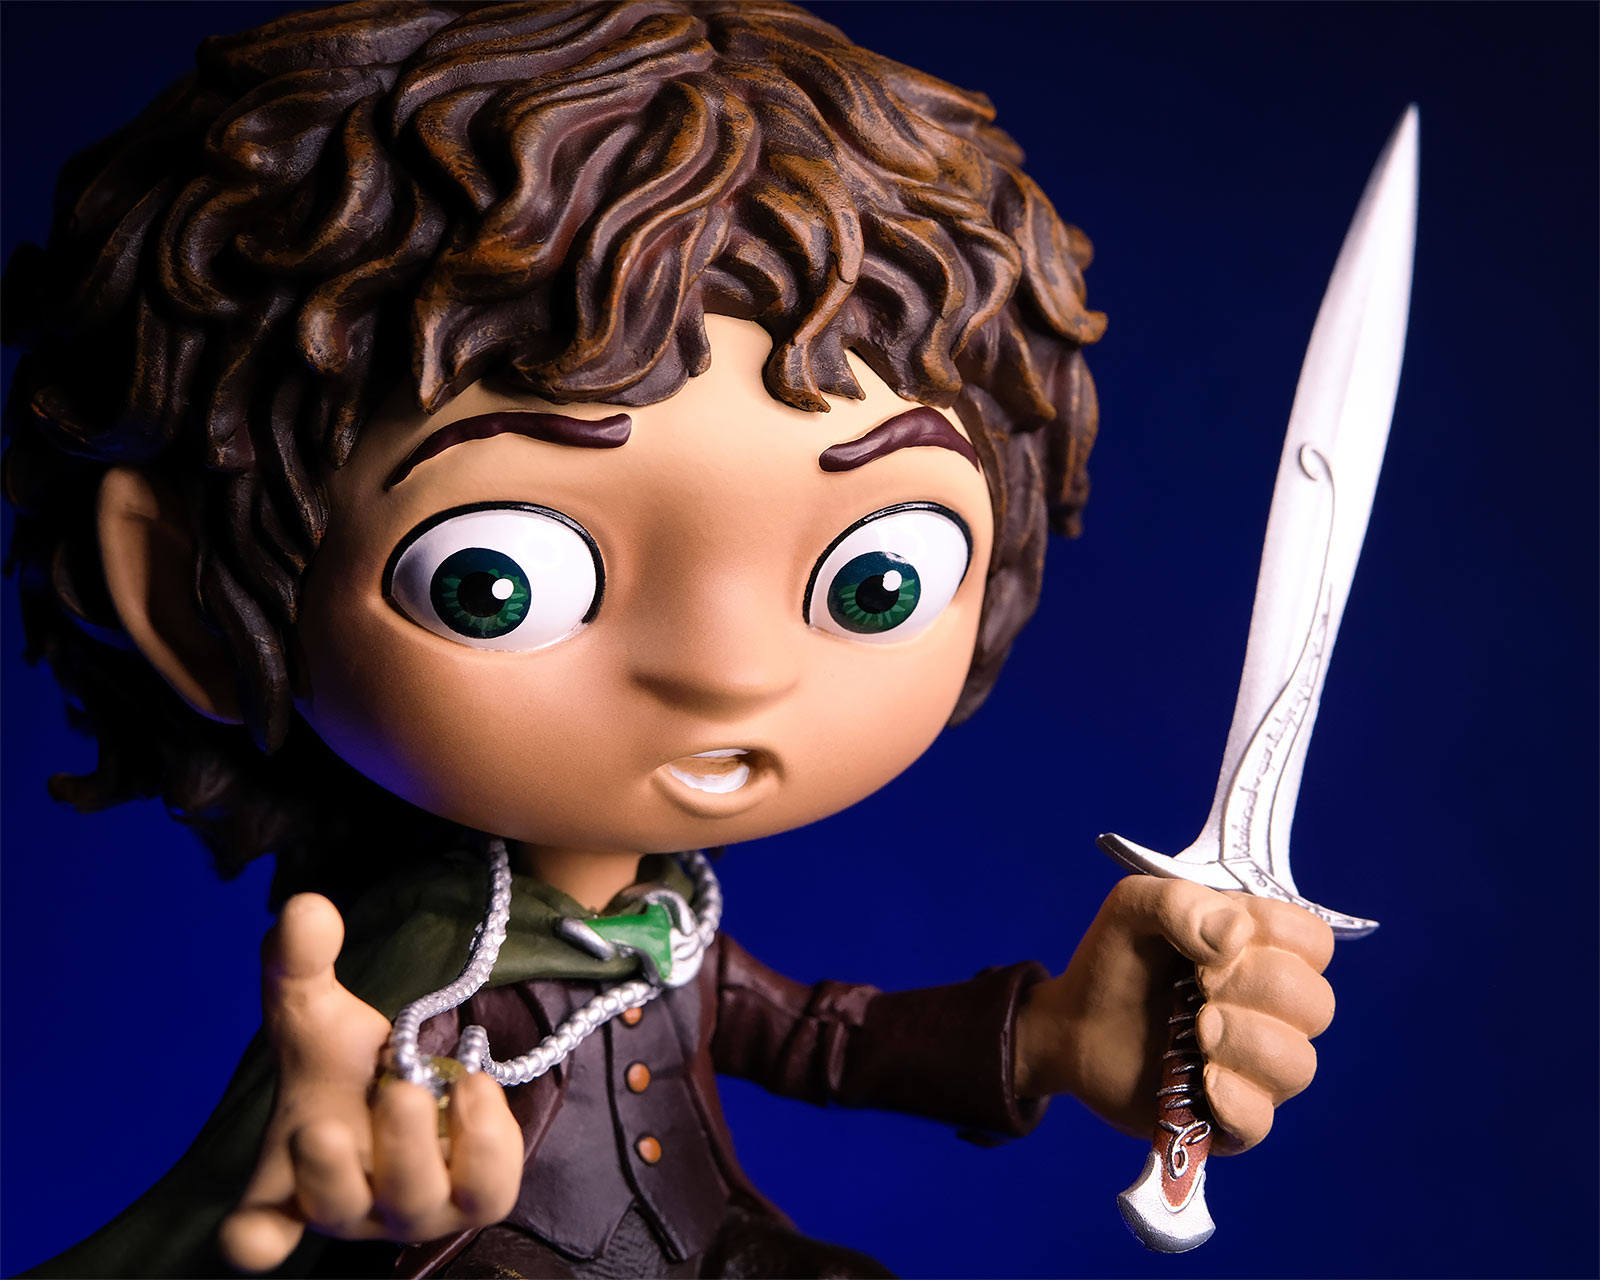 Seigneur des Anneaux - Figurine Frodo Minico